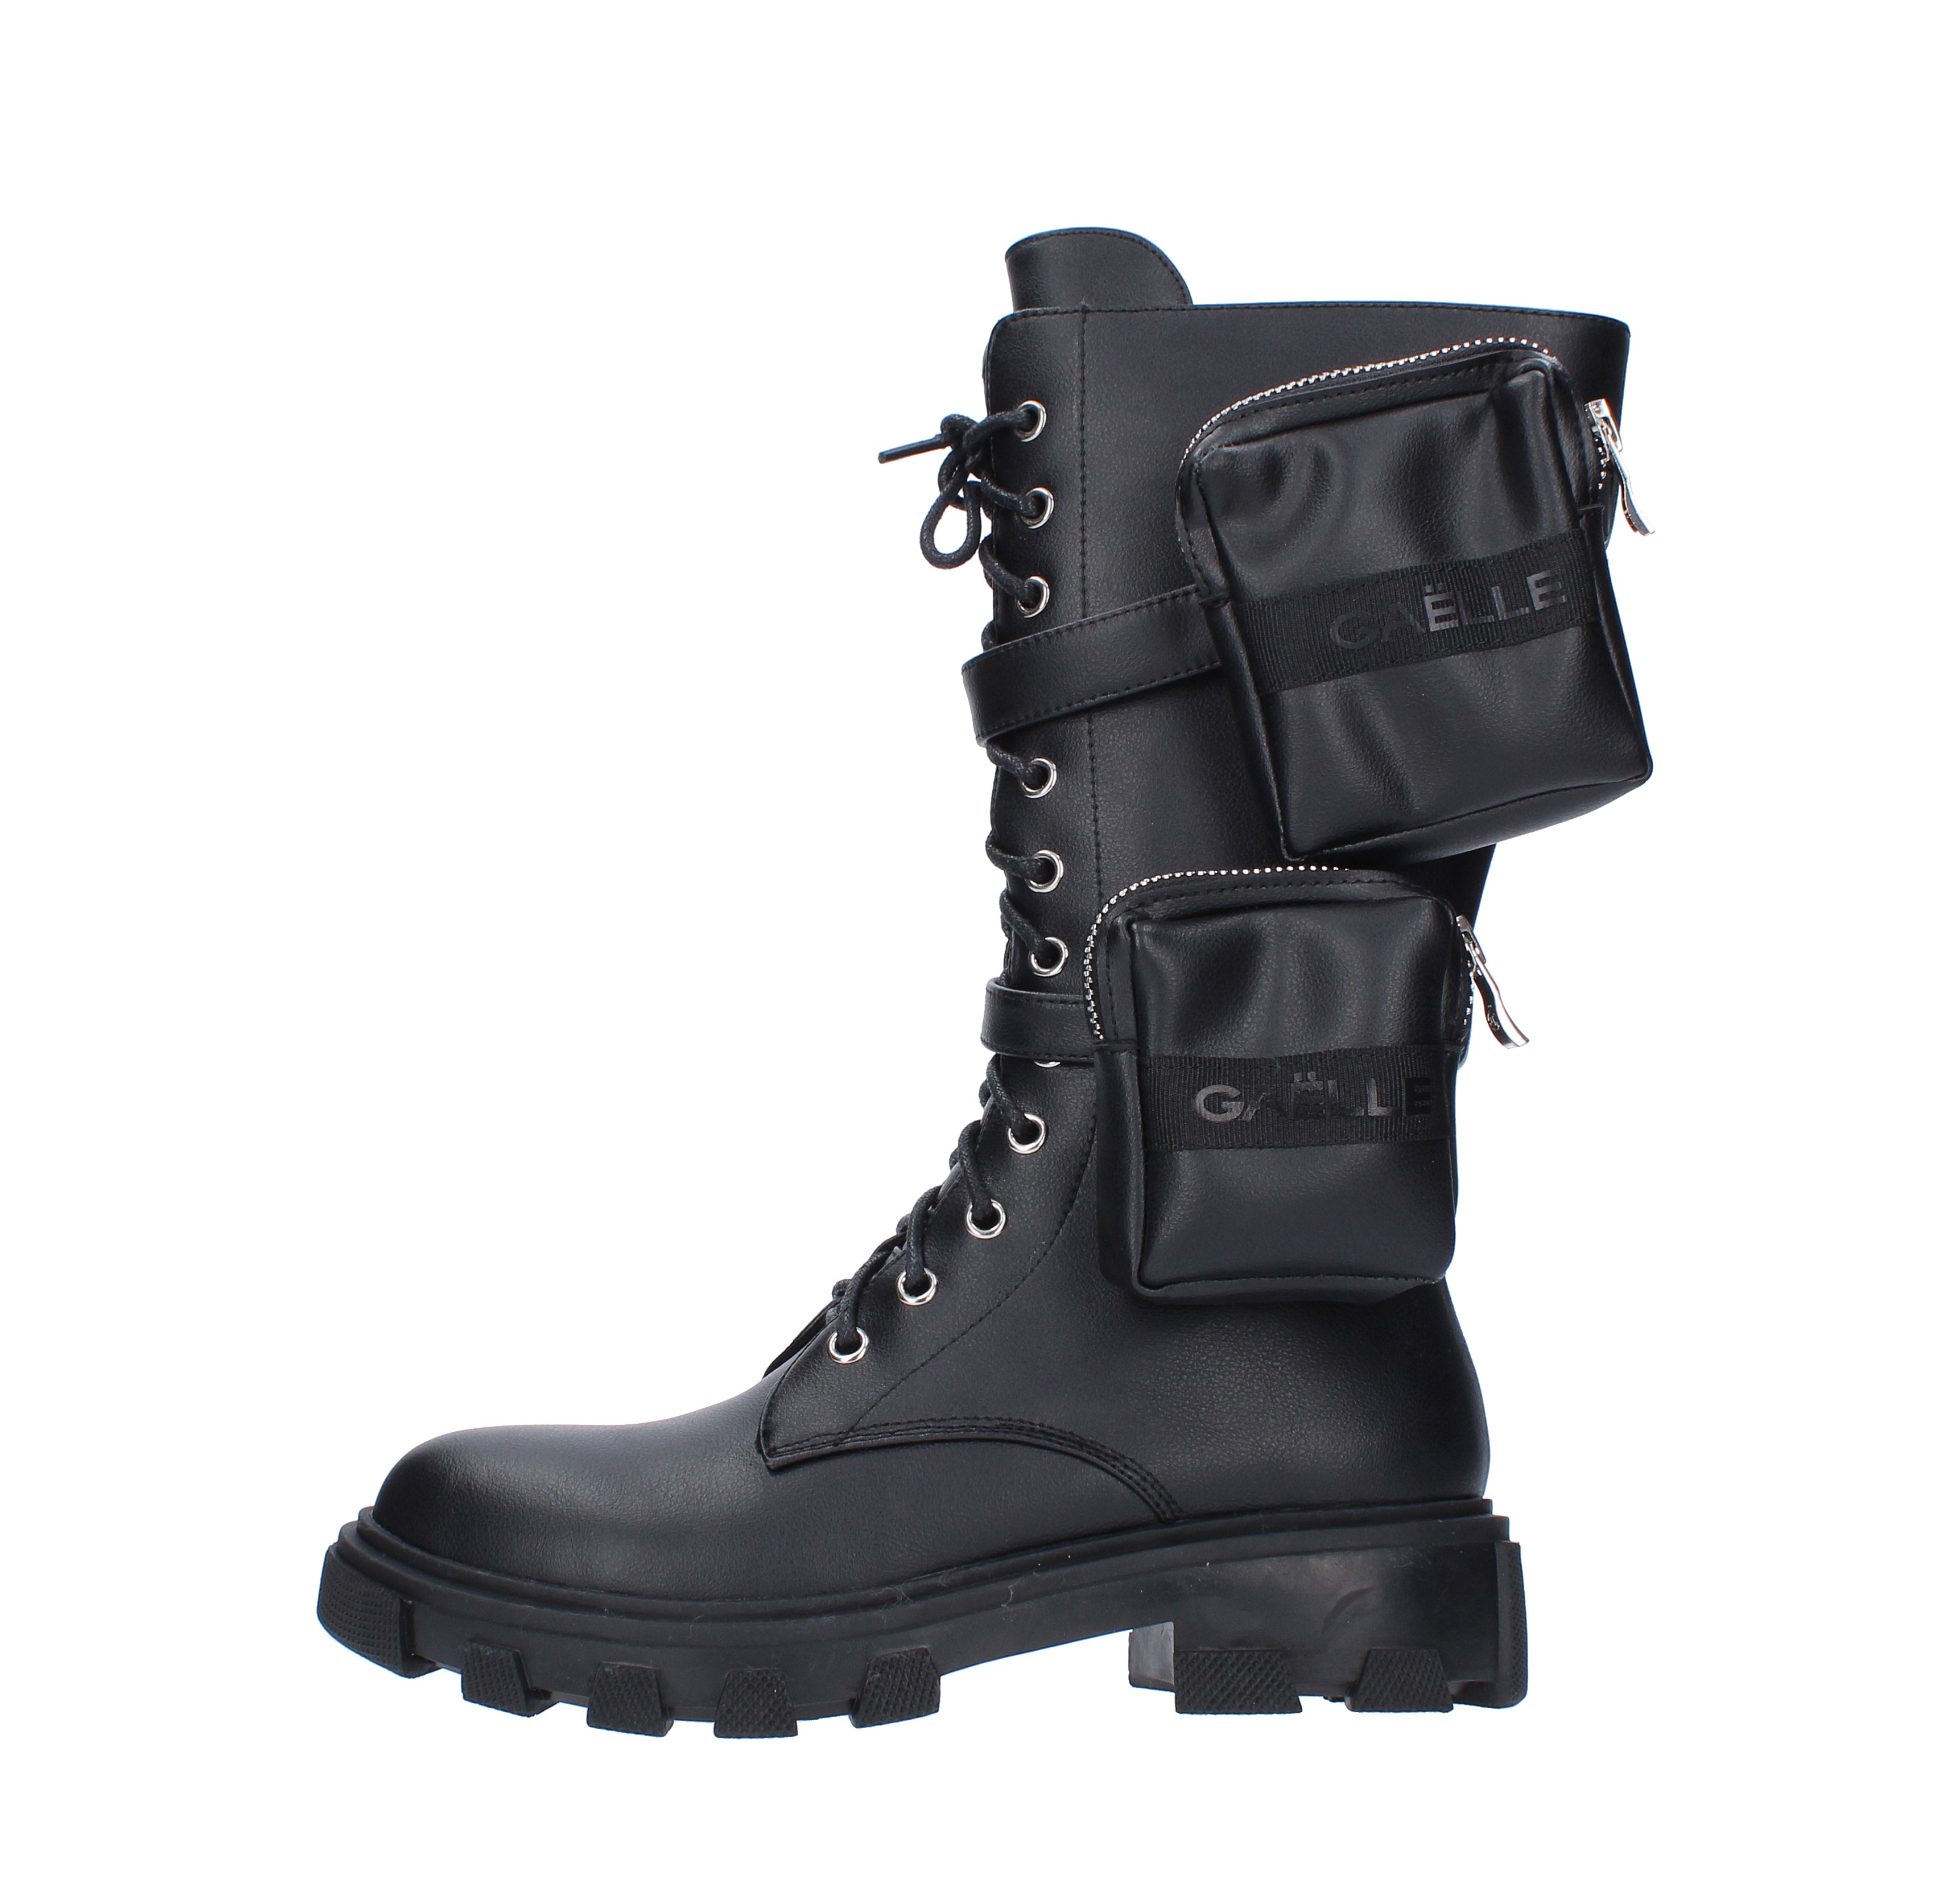 Boots Black - GAELLE - Ginevra calzature